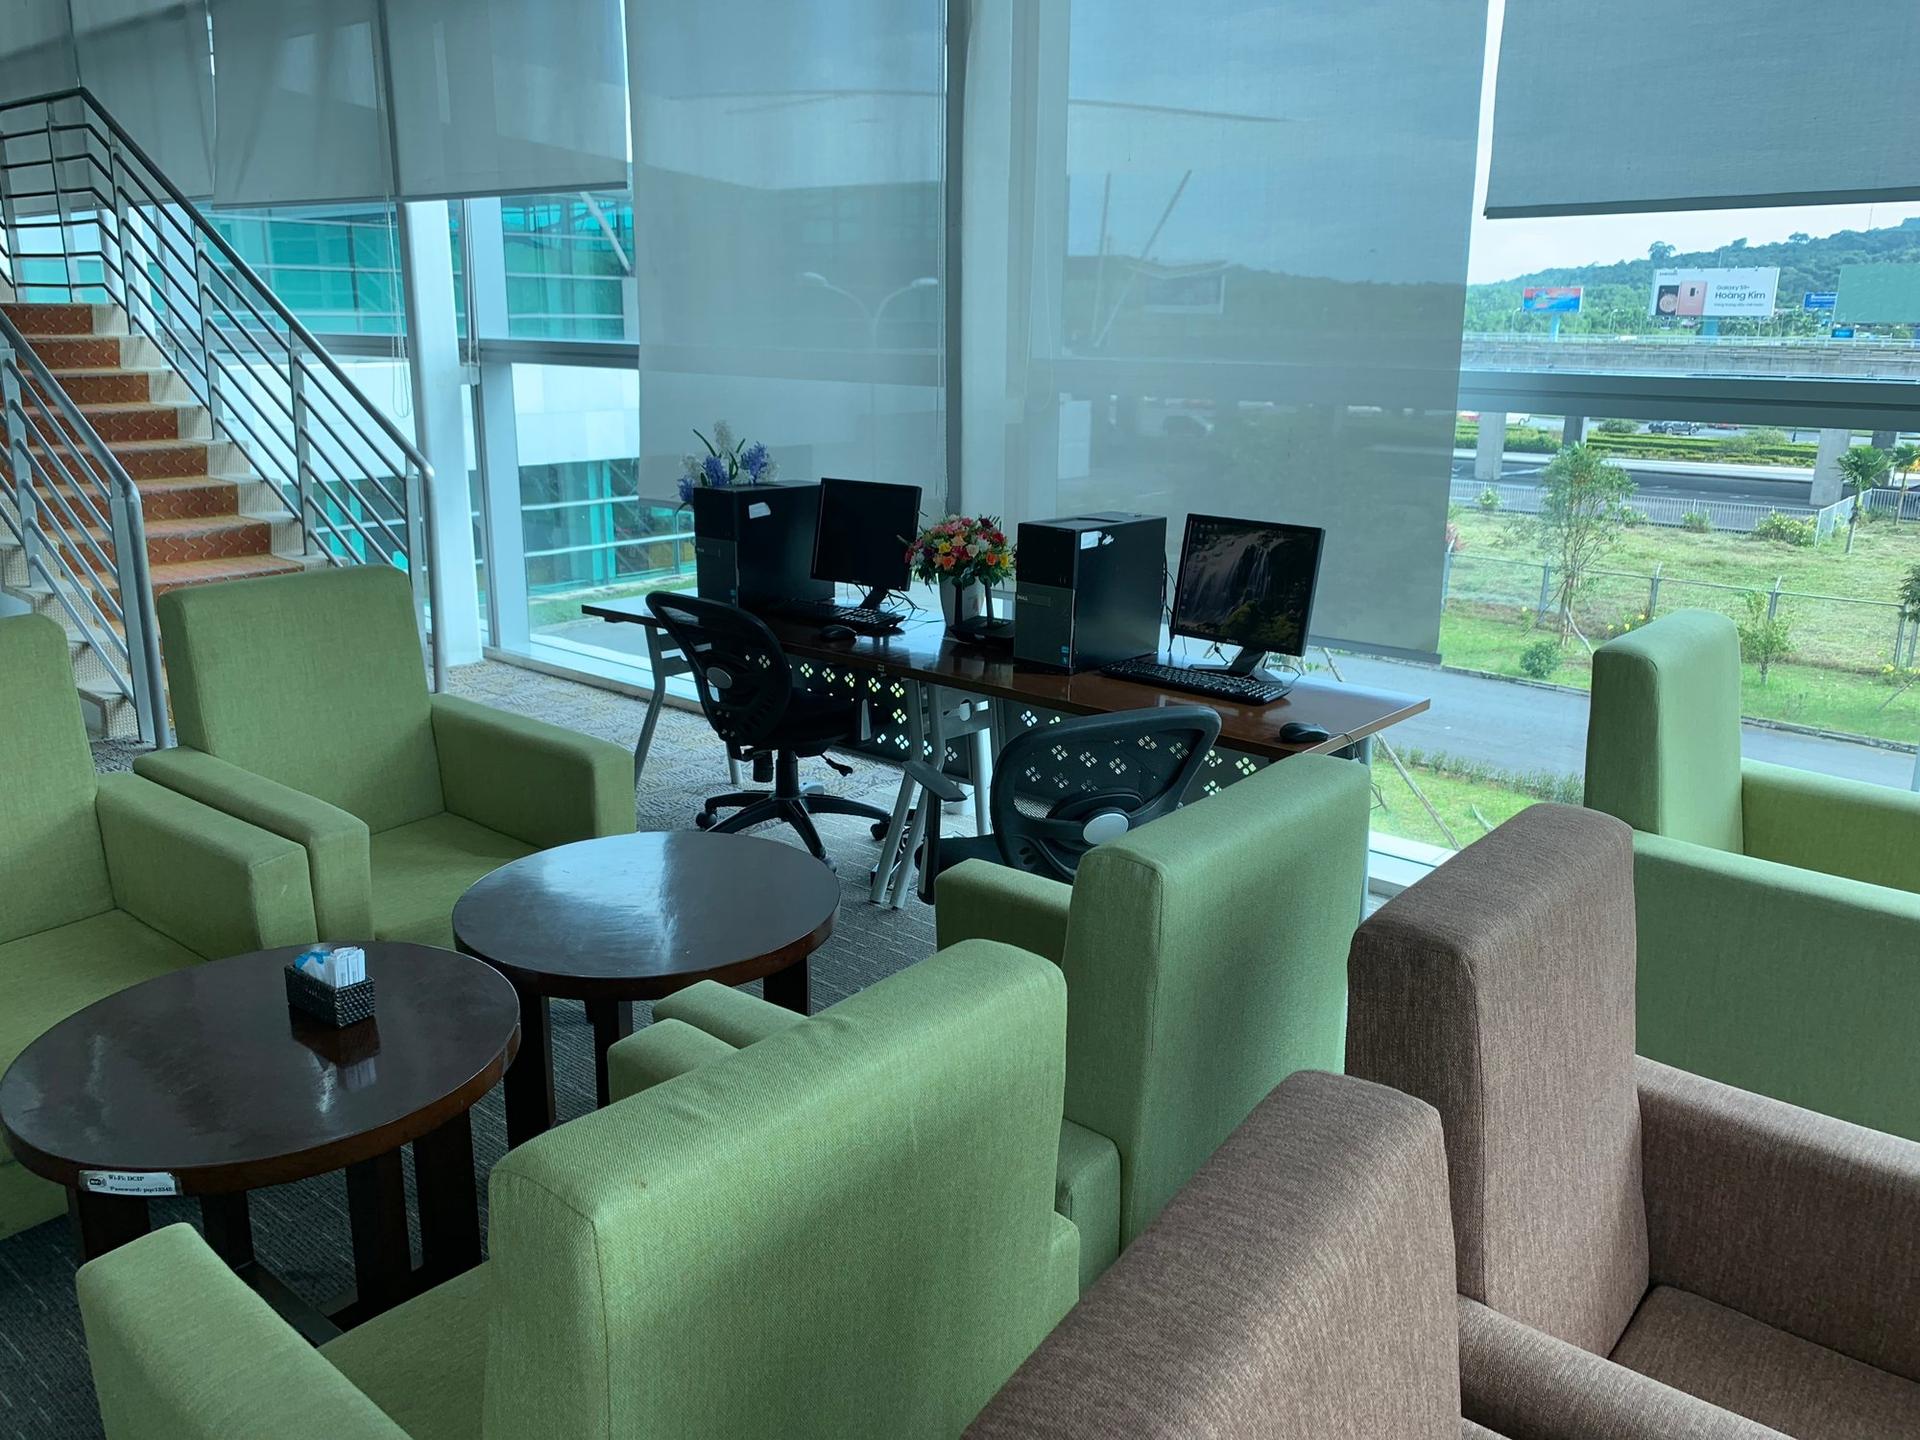 Hoa Sim Business Lounge image 2 of 3